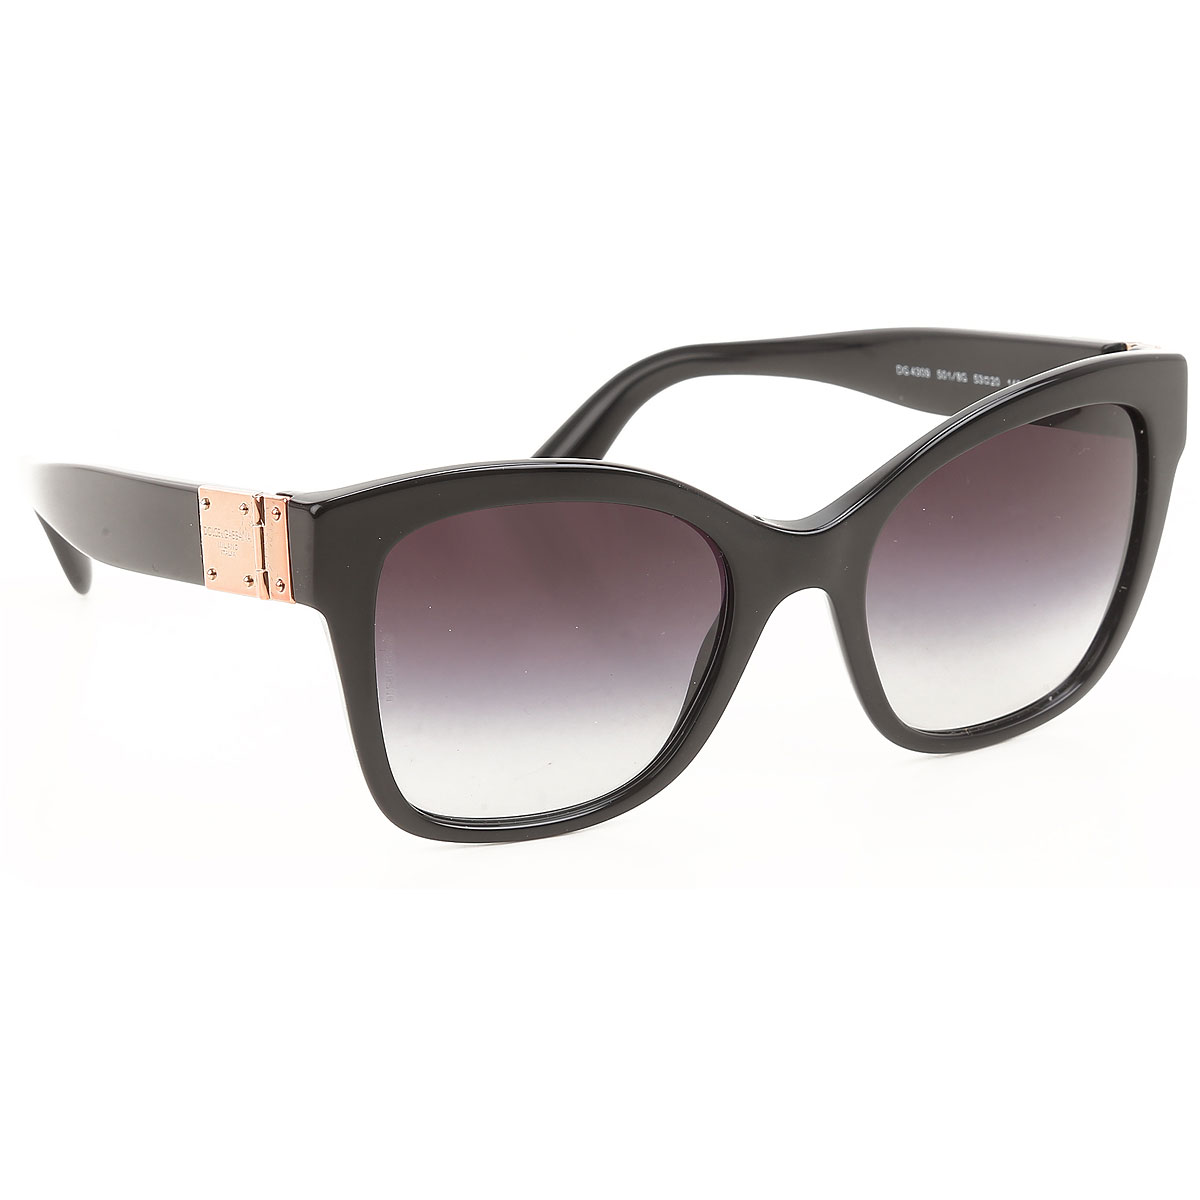 Sunglasses Dolce & Gabbana, Style code: dg4309-501-8g